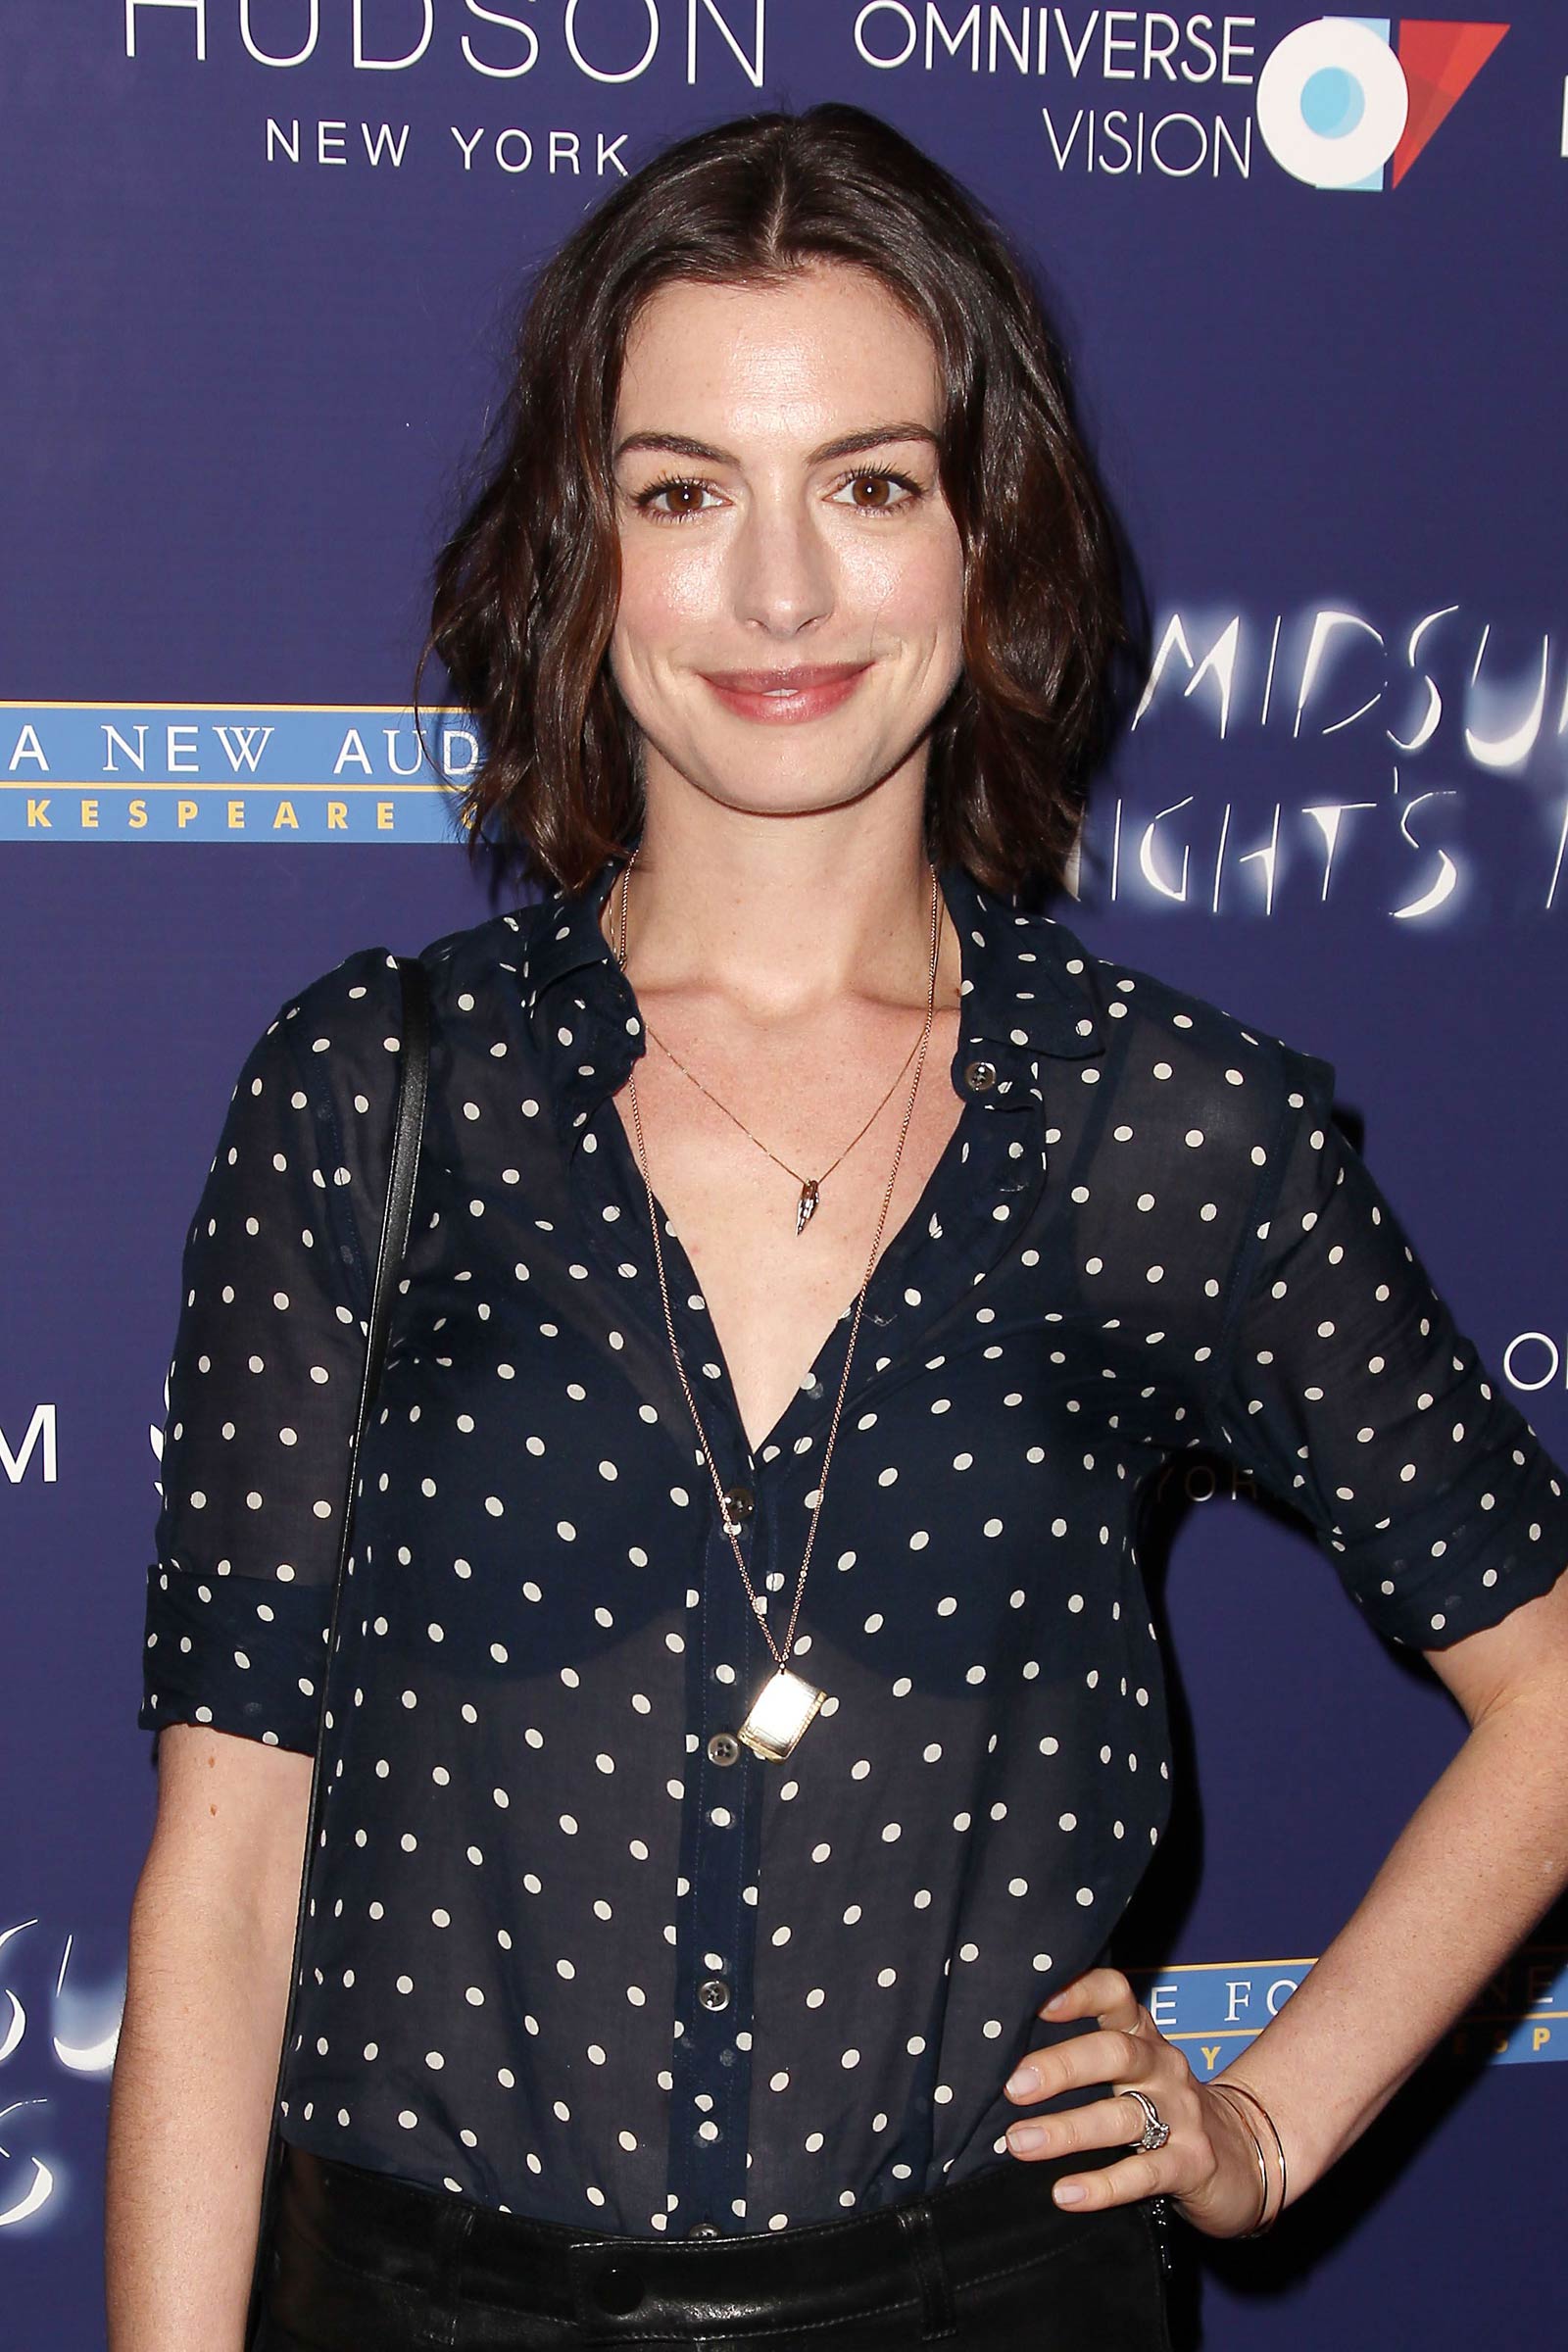 Anne Hathaway attends A Midsummer Night’s Dream premiere